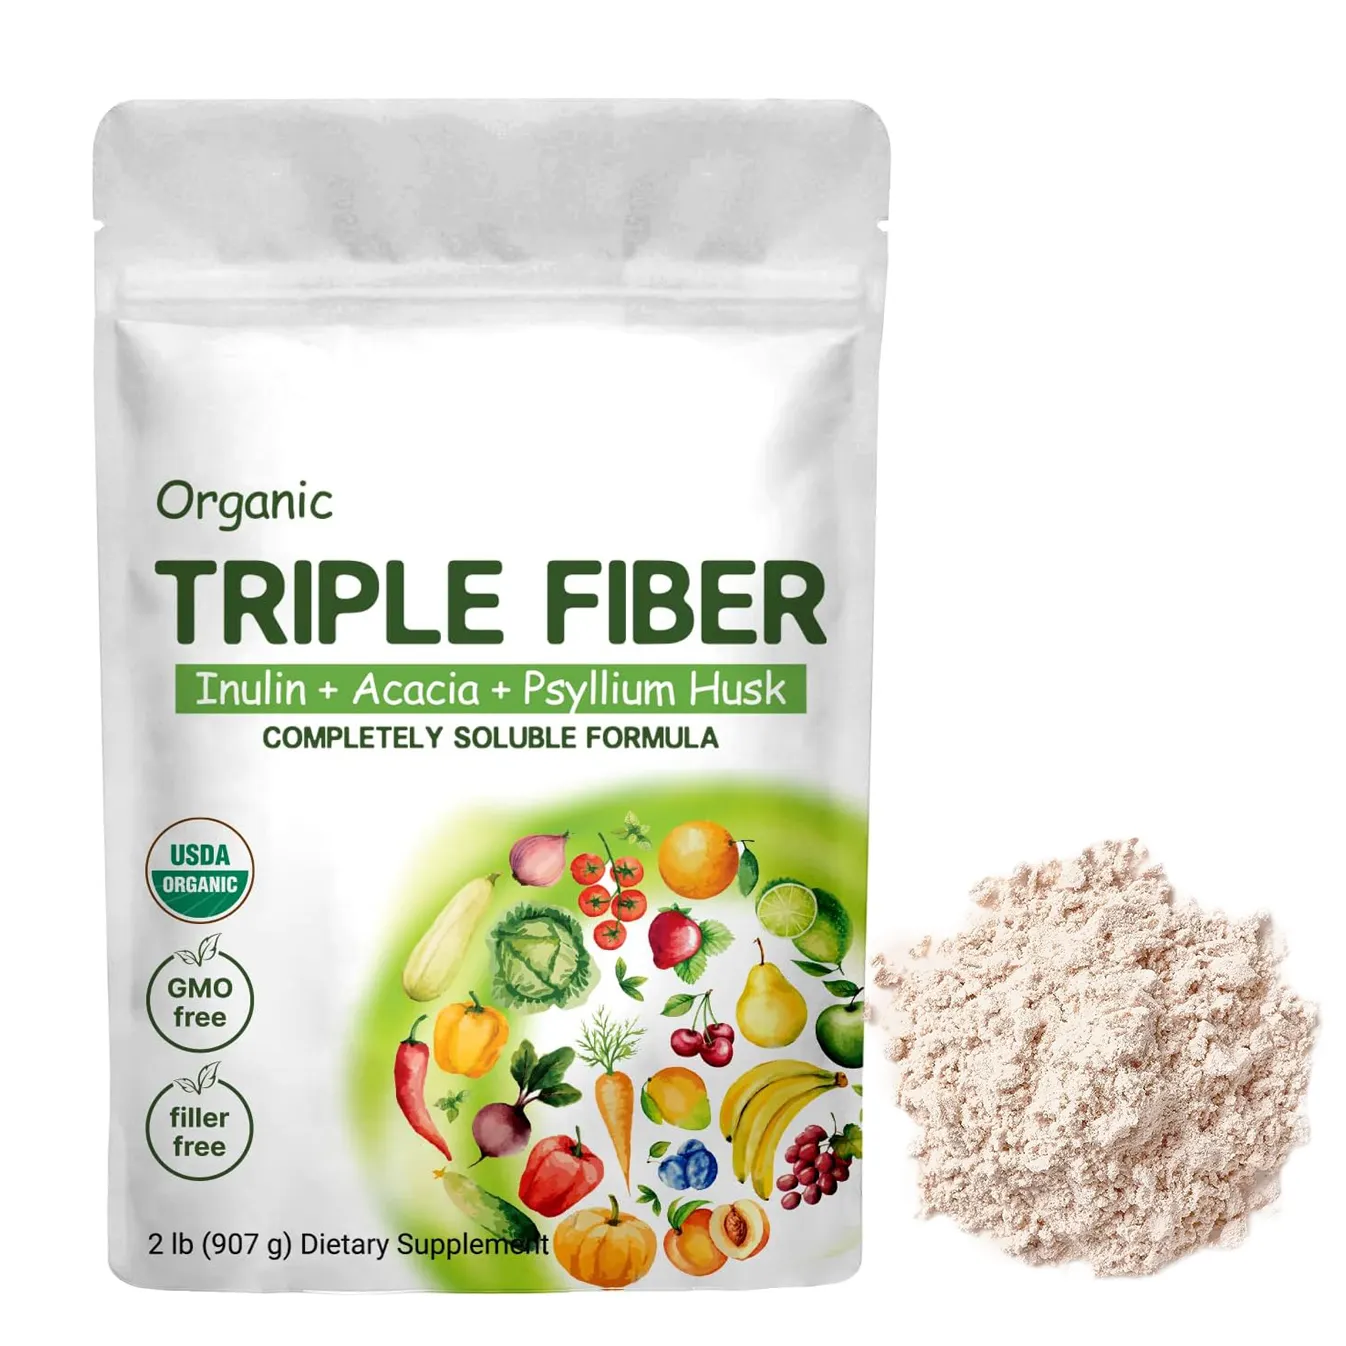 Natural Daily Fiber Ibulin Organic Soluble Prebiotics Fiber Supplement For Digestive Health